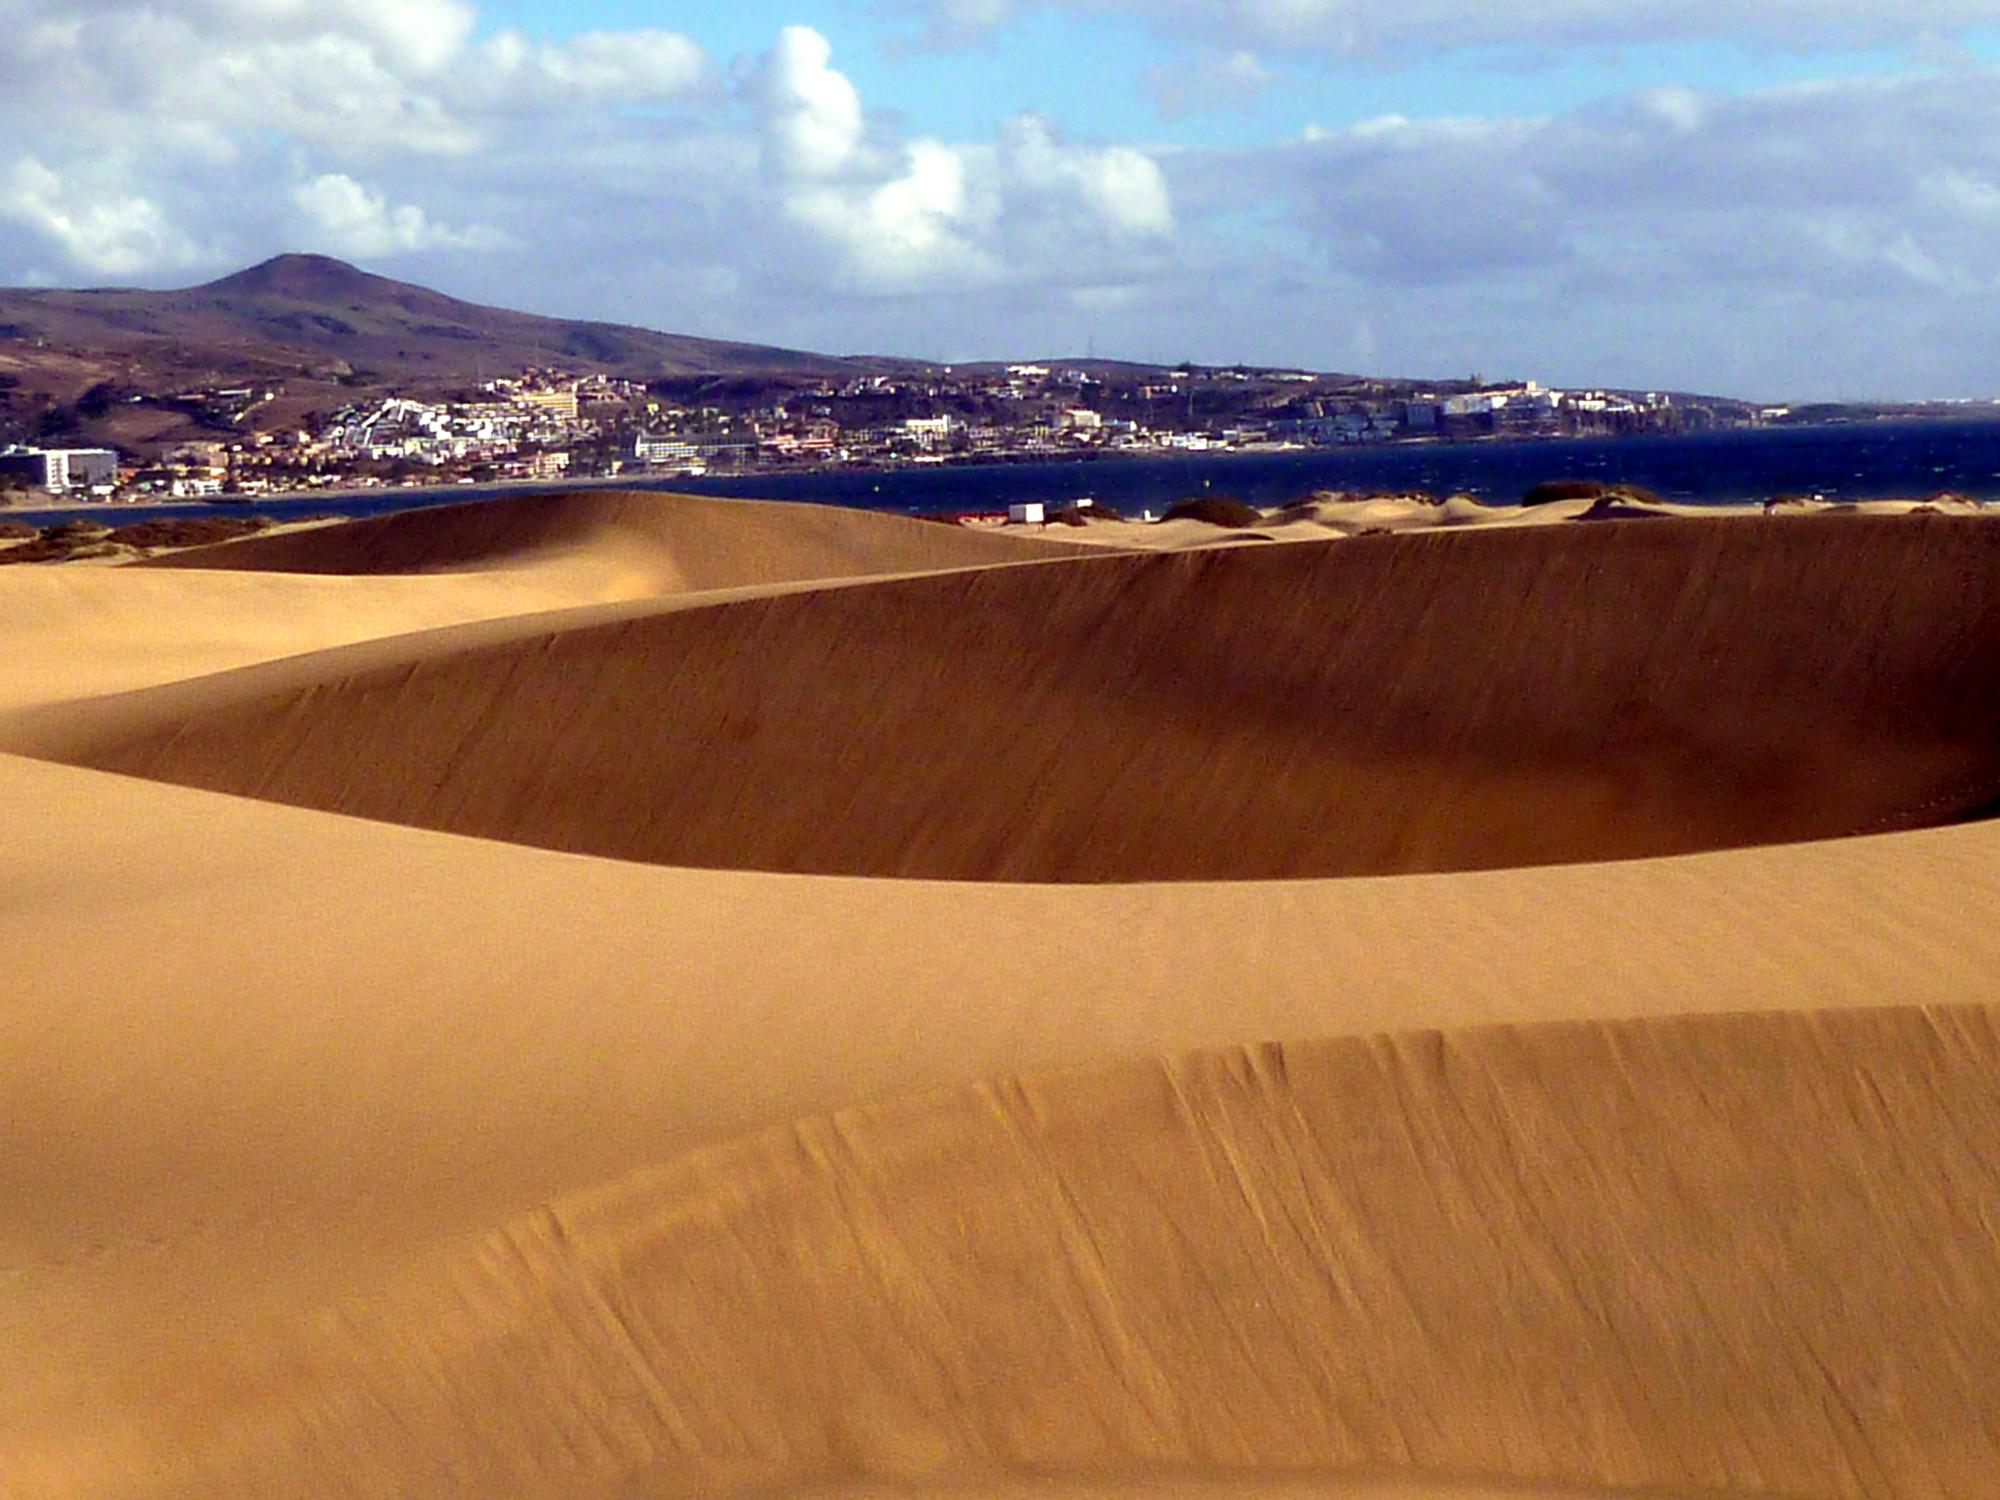  Canary Islands - Dunes #4